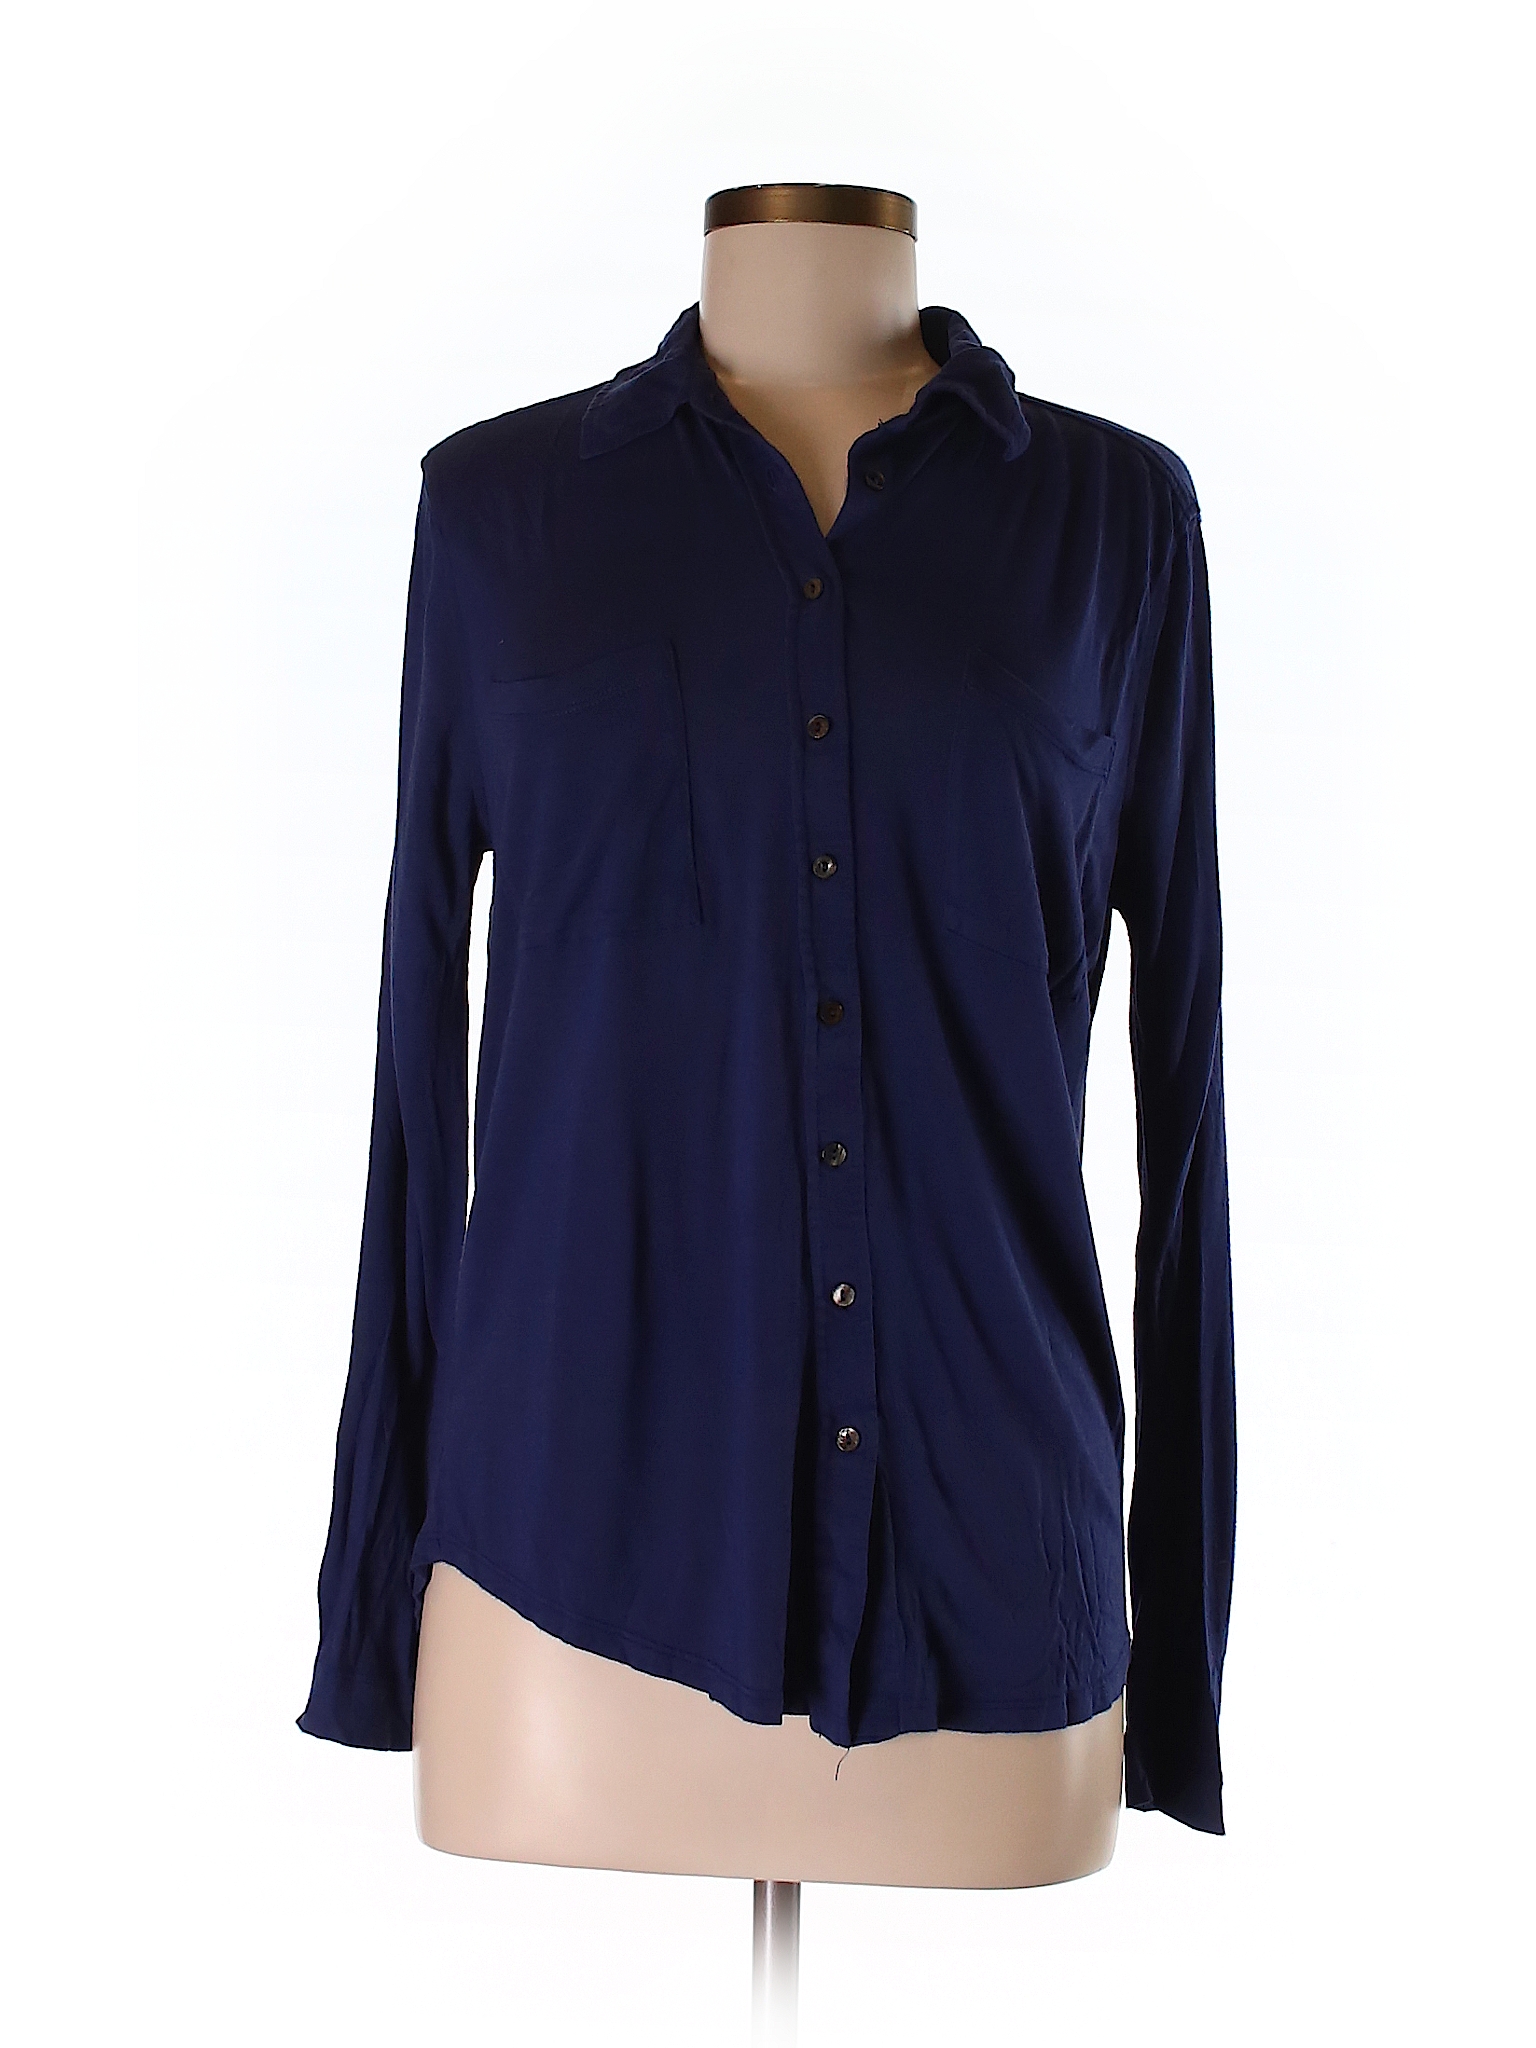 Joe Fresh 100% Viscose Solid Navy Blue Long Sleeve Button-Down Shirt ...